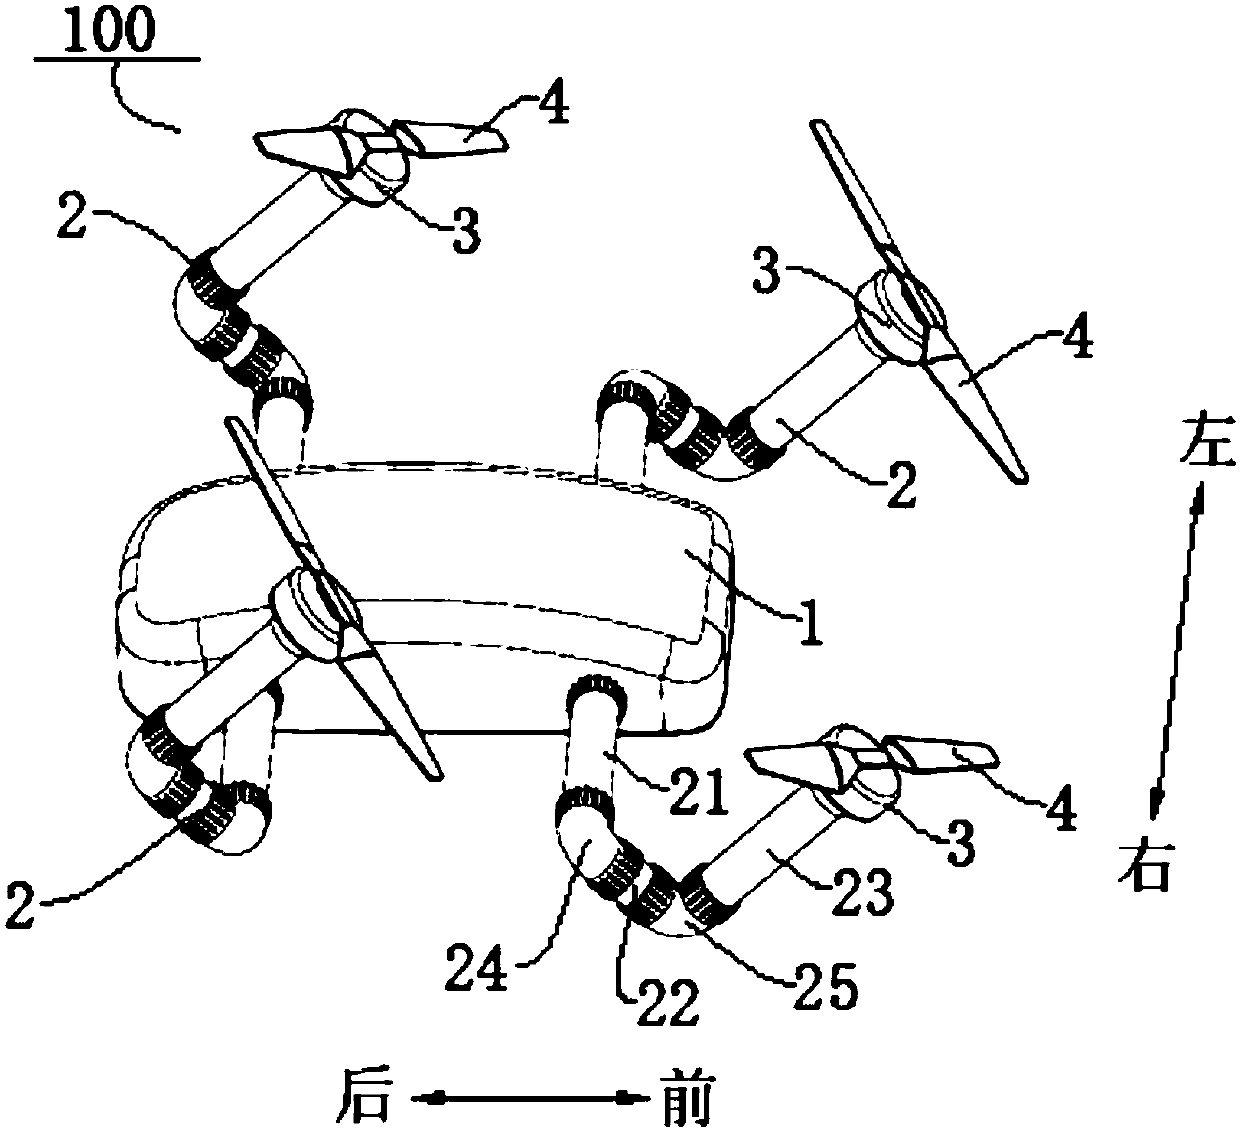 Aircraft and control method of aircraft